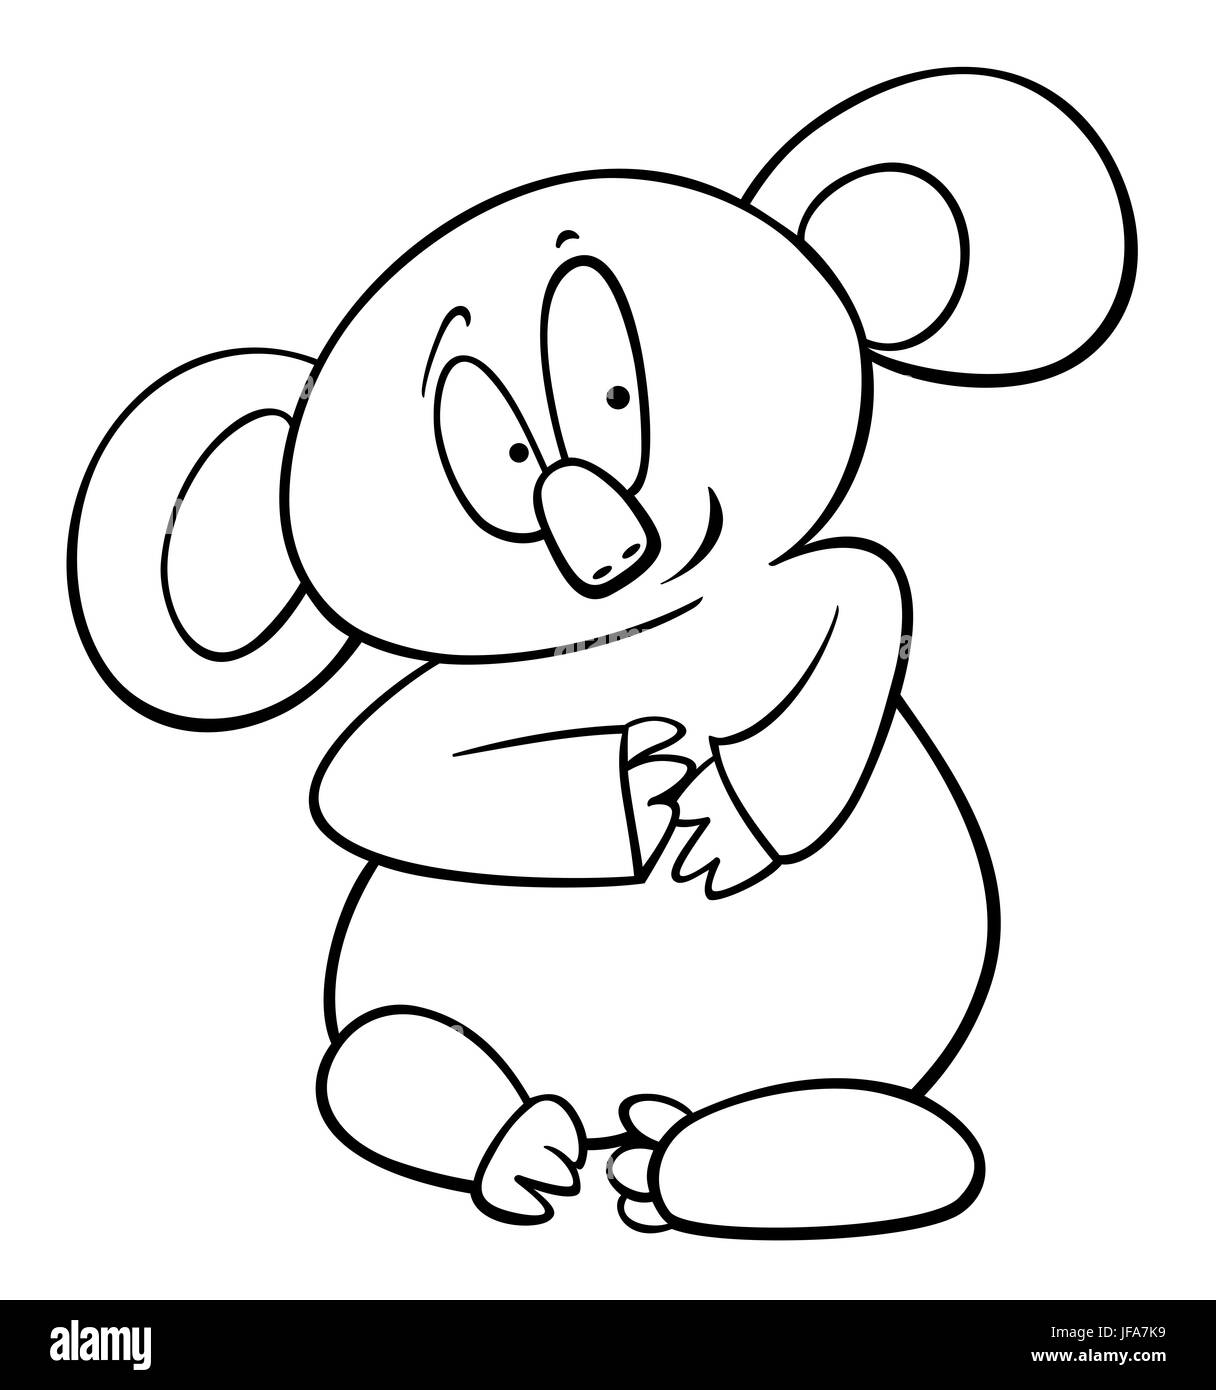 koala cartoon coloring page Stock Photo